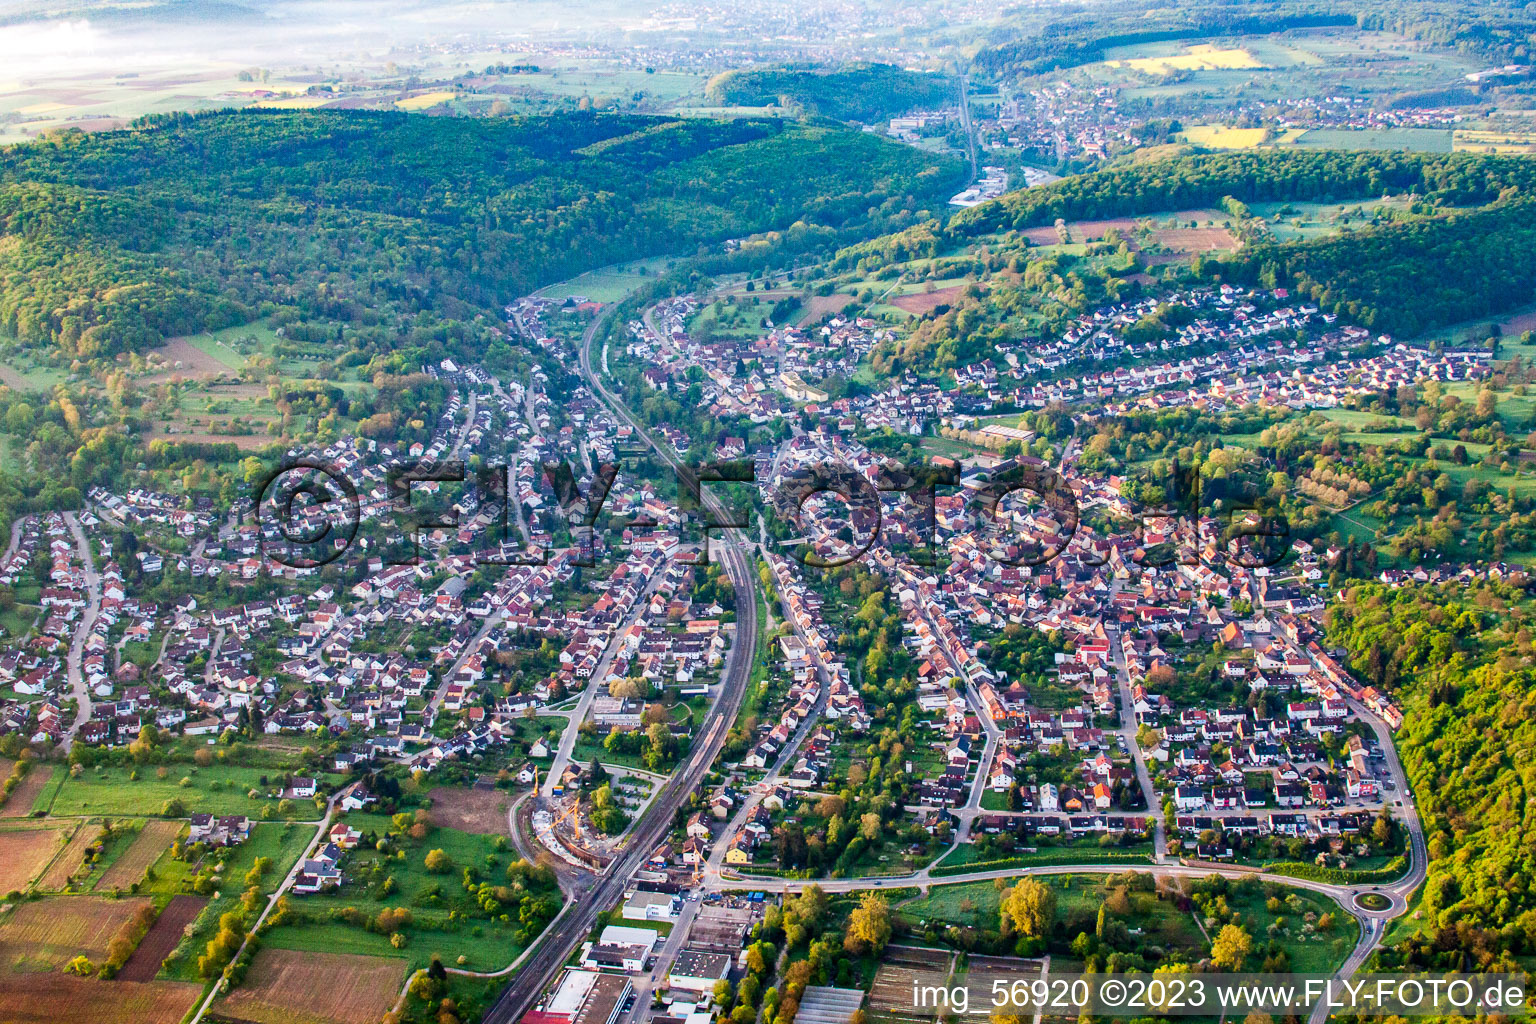 Aerial view of District Söllingen in Pfinztal in the state Baden-Wuerttemberg, Germany